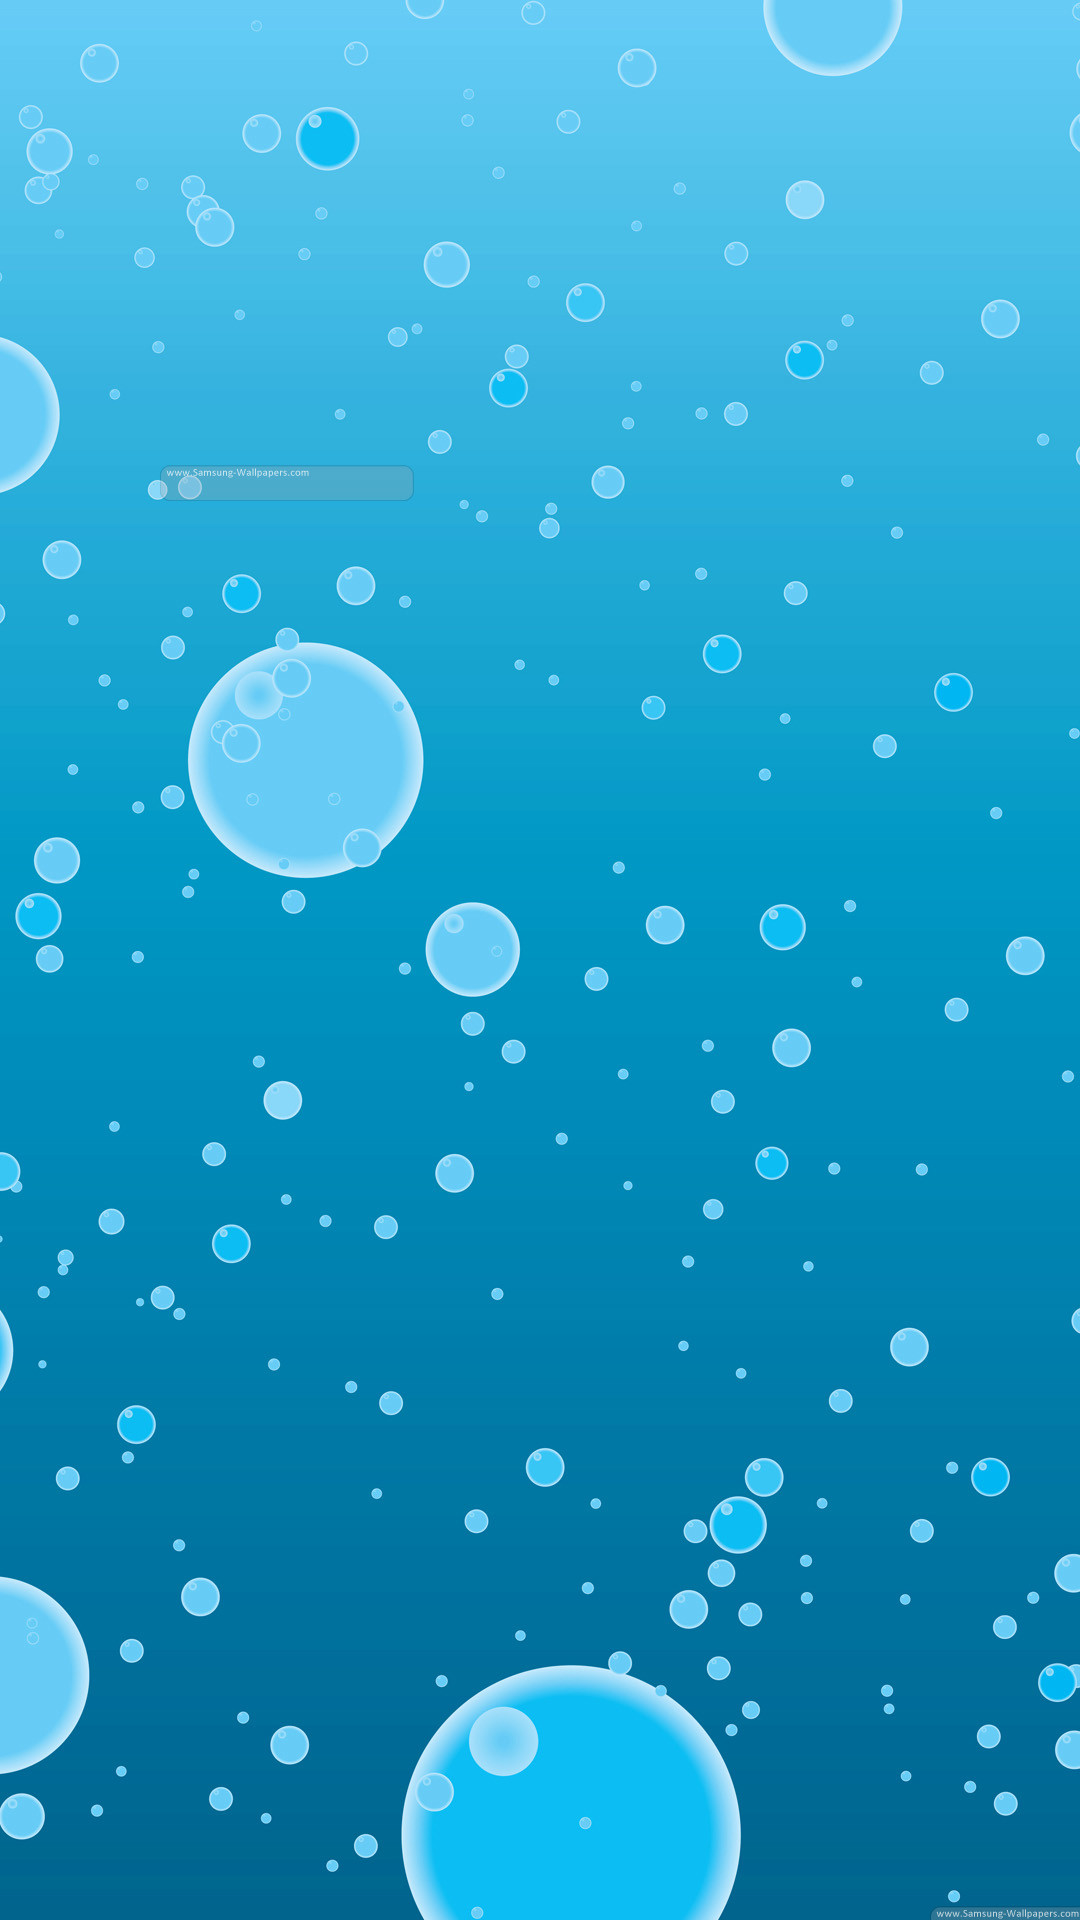 1080x1920 Water Bubbles Illustration iPhone 6 Plus HD Wallpaper ...